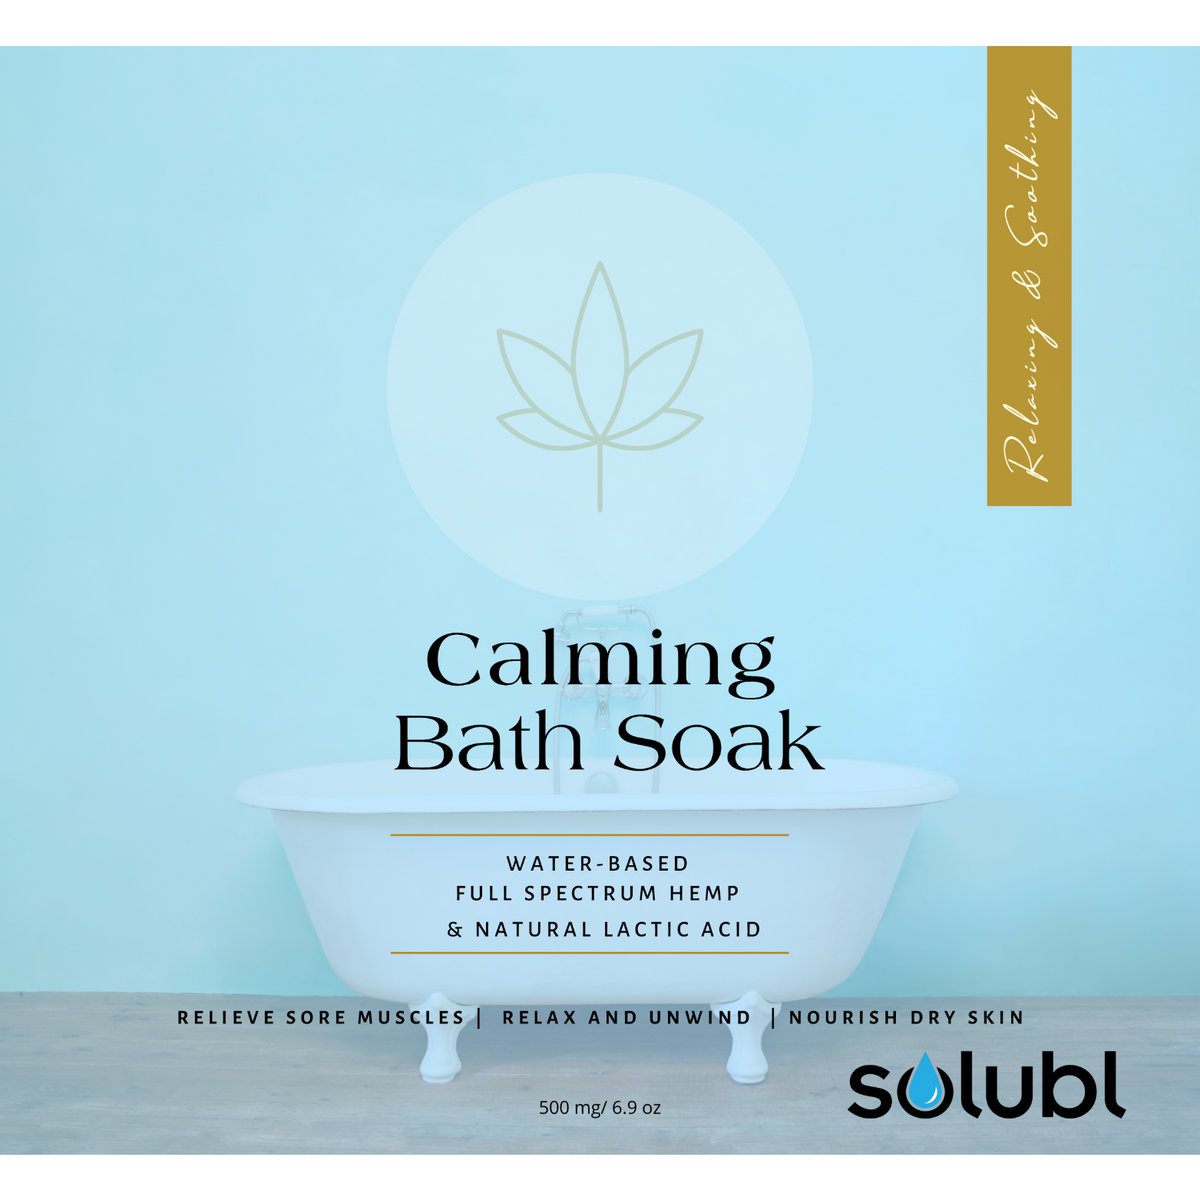 Calming Bath Soak